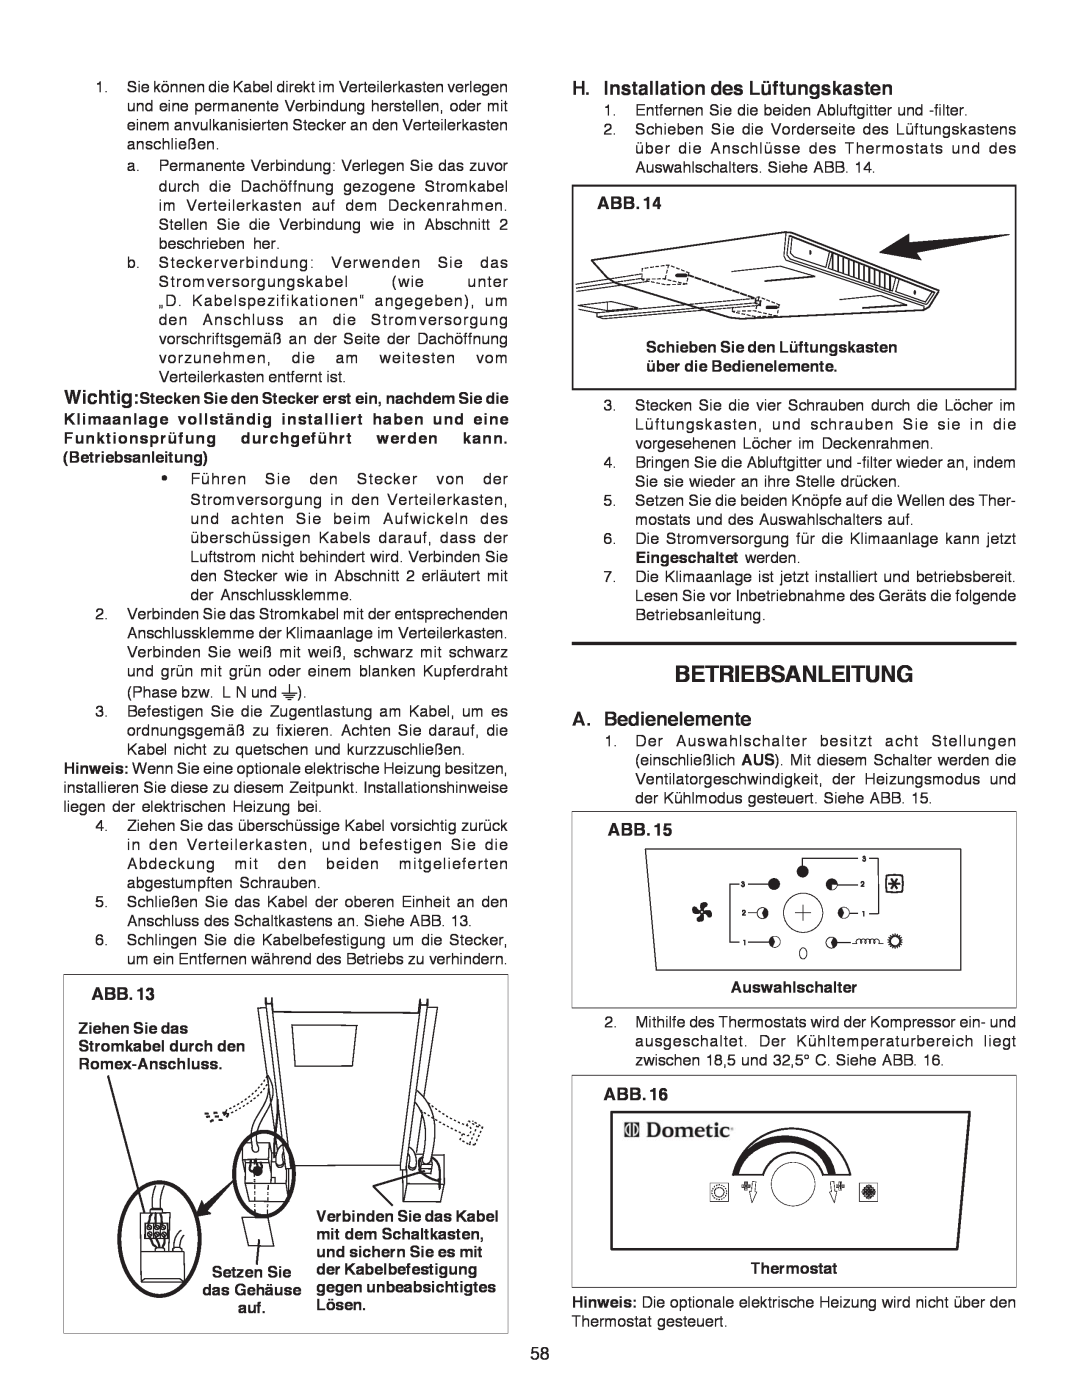 Dometic B3200 manual Betriebsanleitung, H.Installation des Lüftungskasten, A.Bedienelemente, Abb 